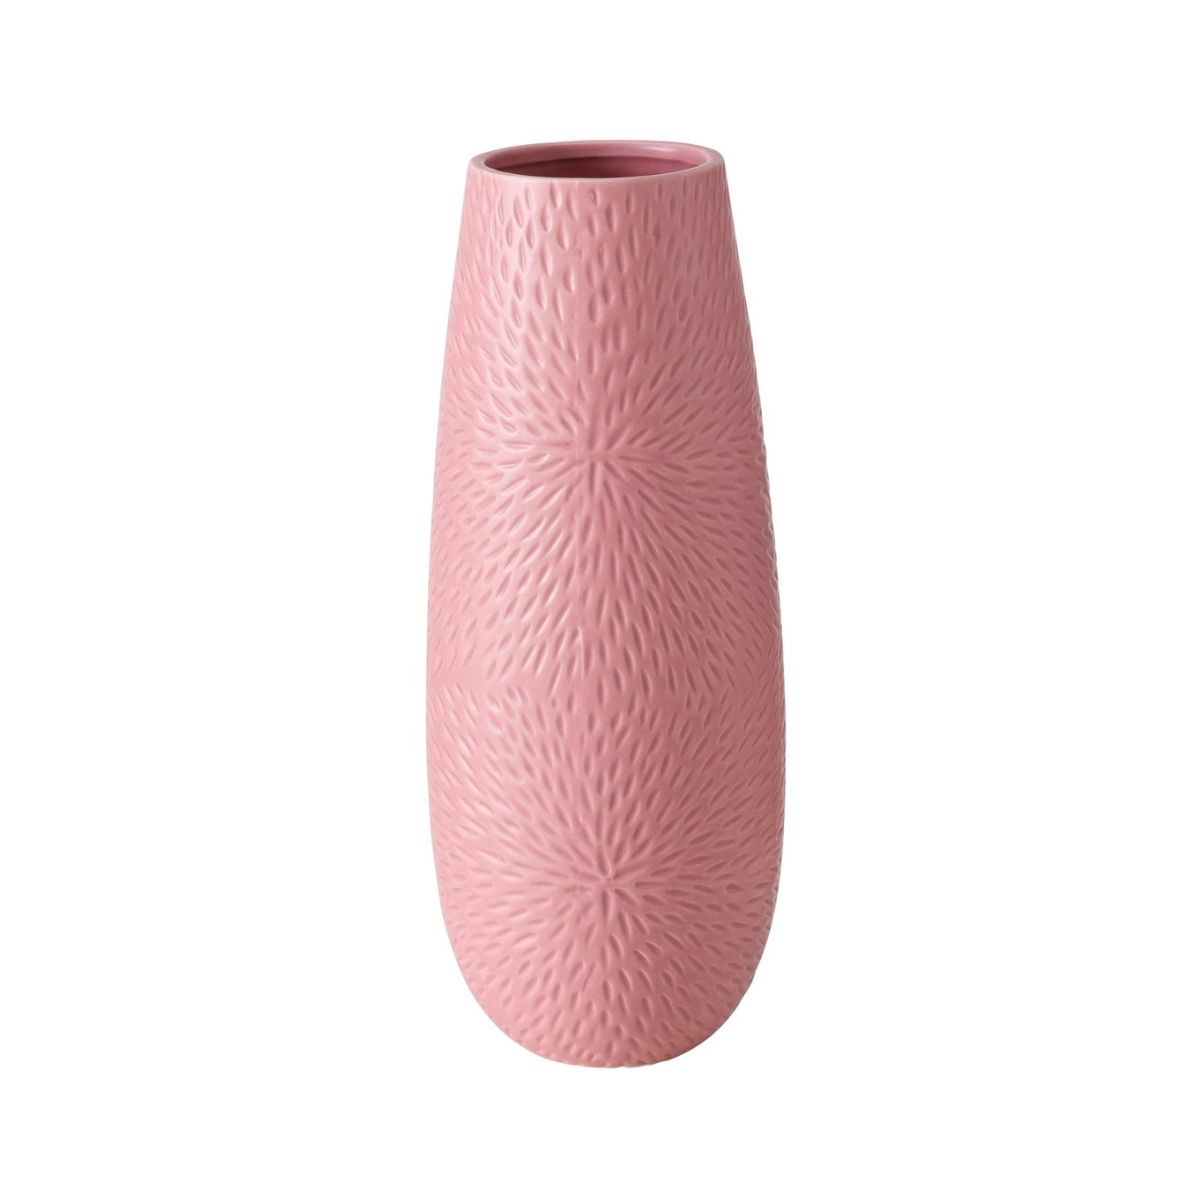 Decoratiuni de interior - Vaza roz pal din ceramica 31 cm Salina Boltze, hectarul.ro